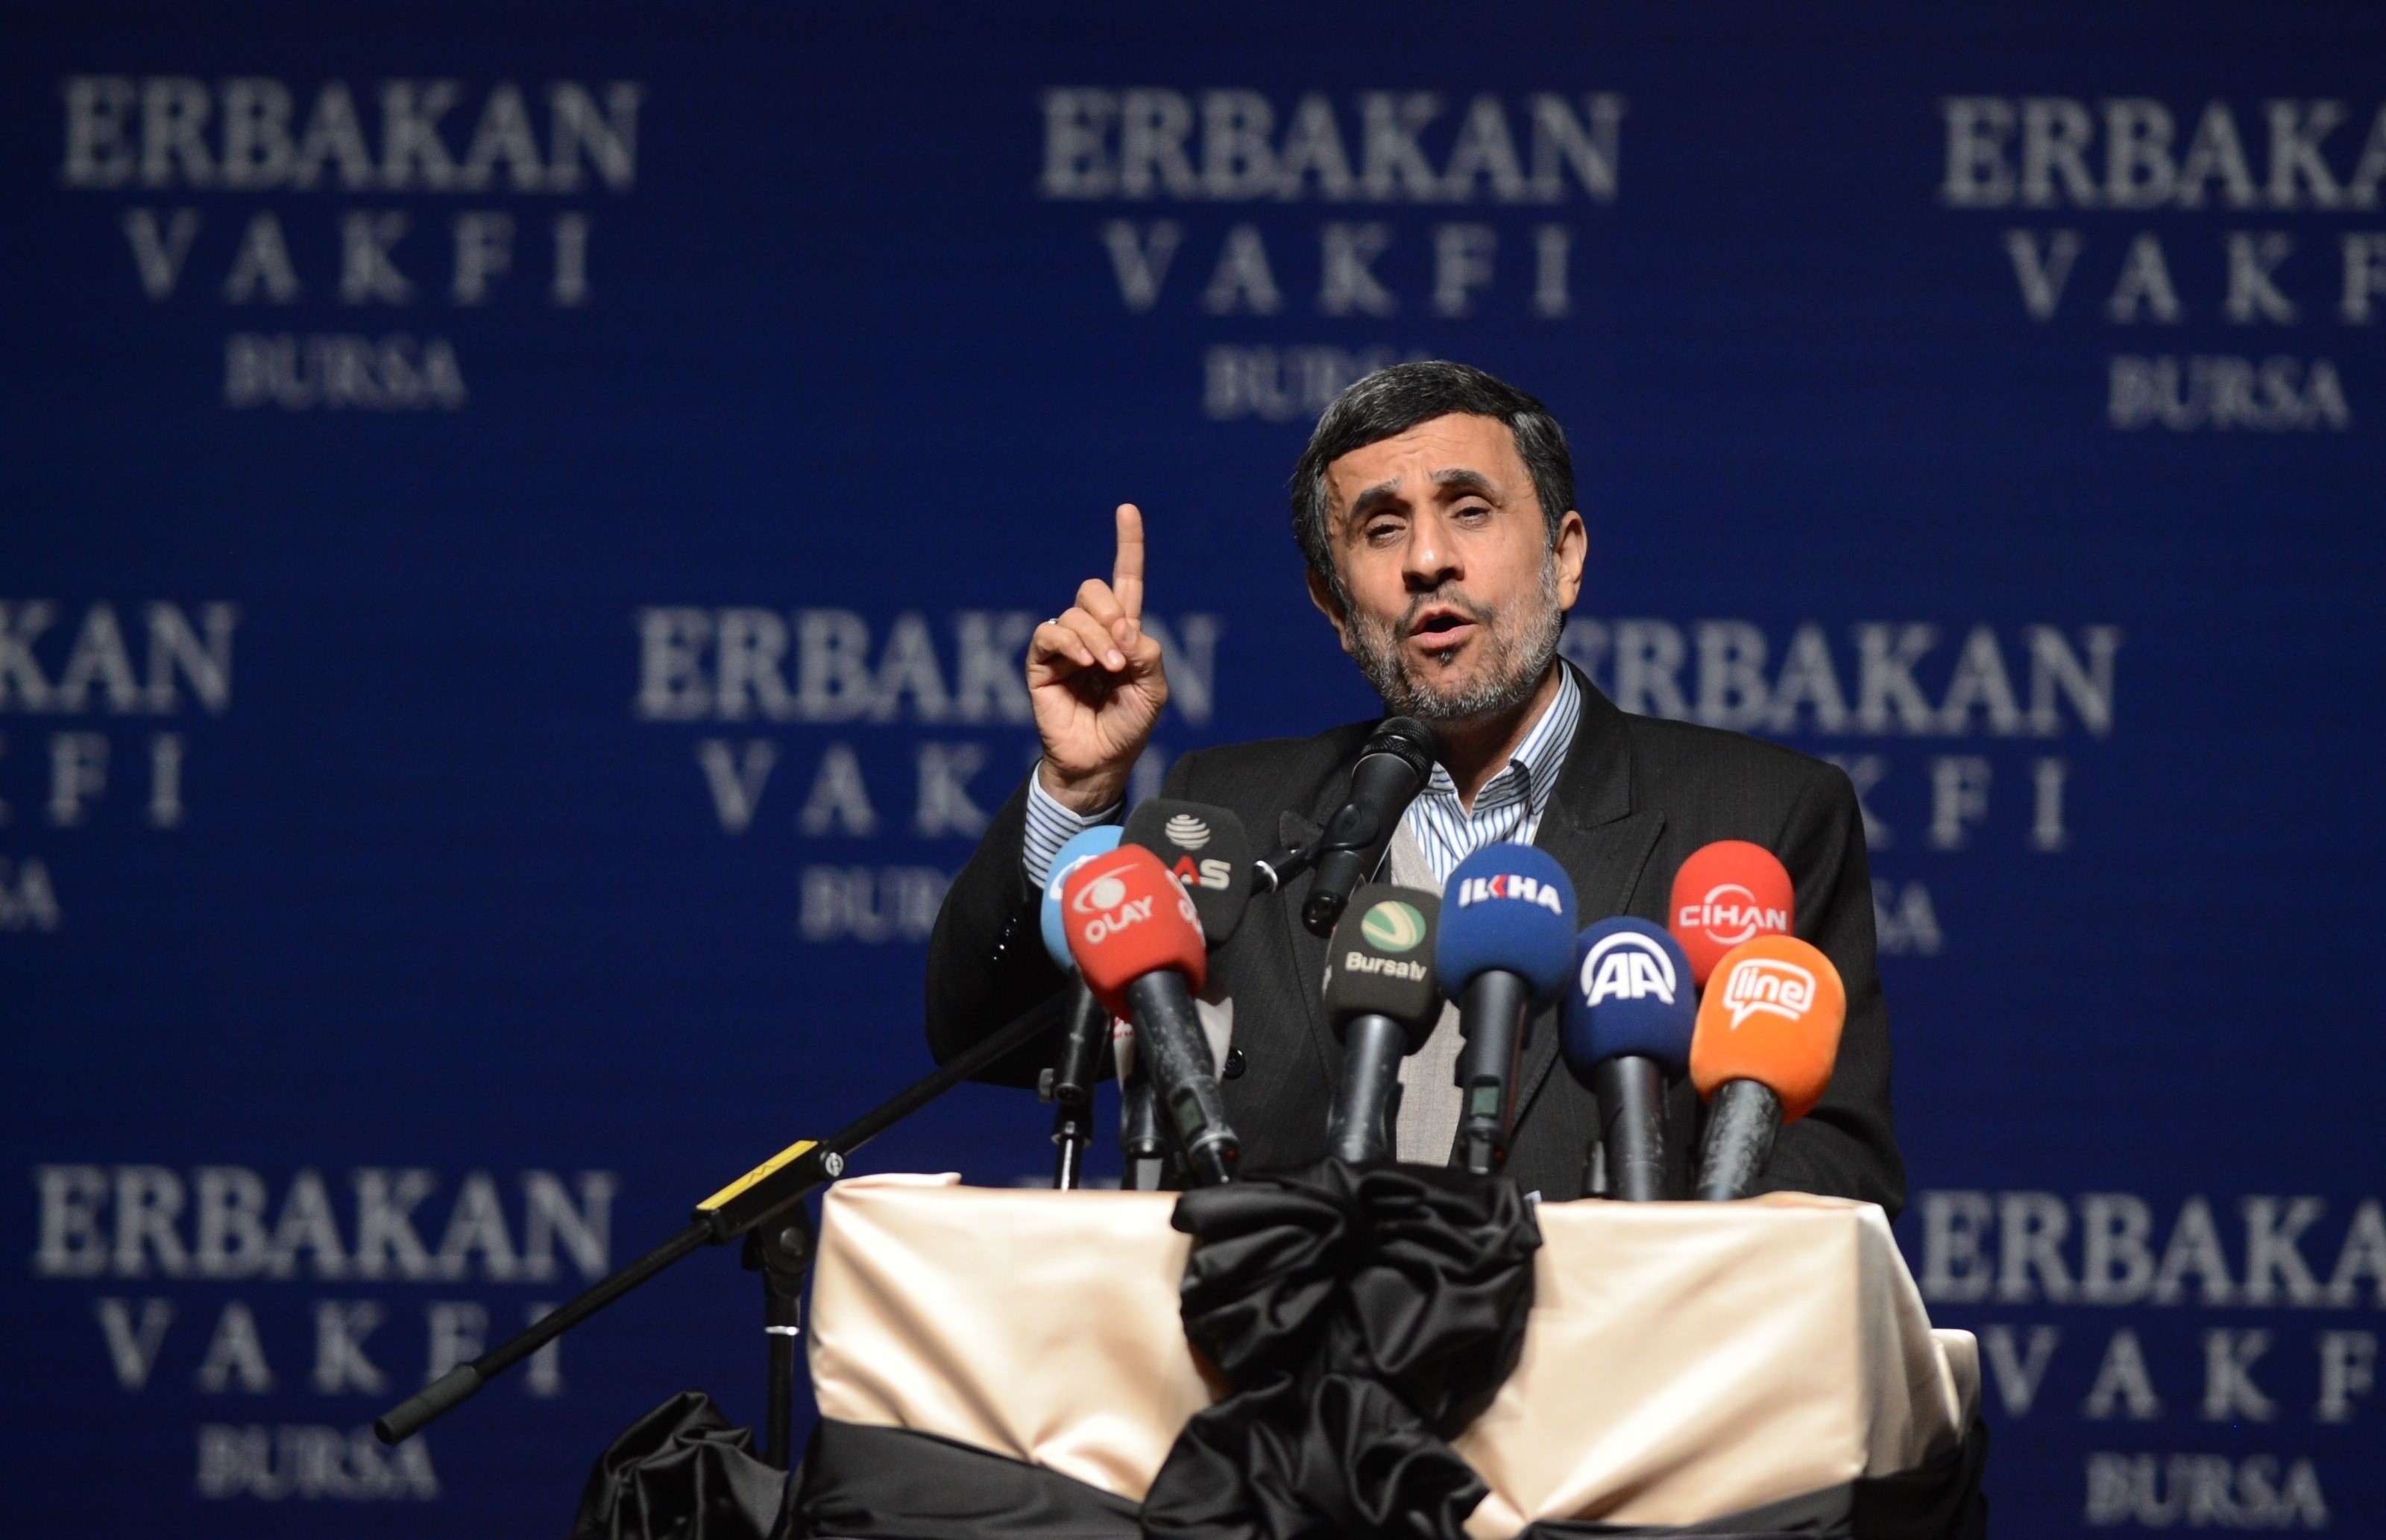 Former Iranian President Mahmoud Ahmadinejad makes a speech during commemorating for the late Prime Minister Necmettin Erbakan organized by Erbakan Association in Bursa, Turkey, on Feb. 27, 2015 (Ali Atmaca—Anadolu Agency—Getty Images)